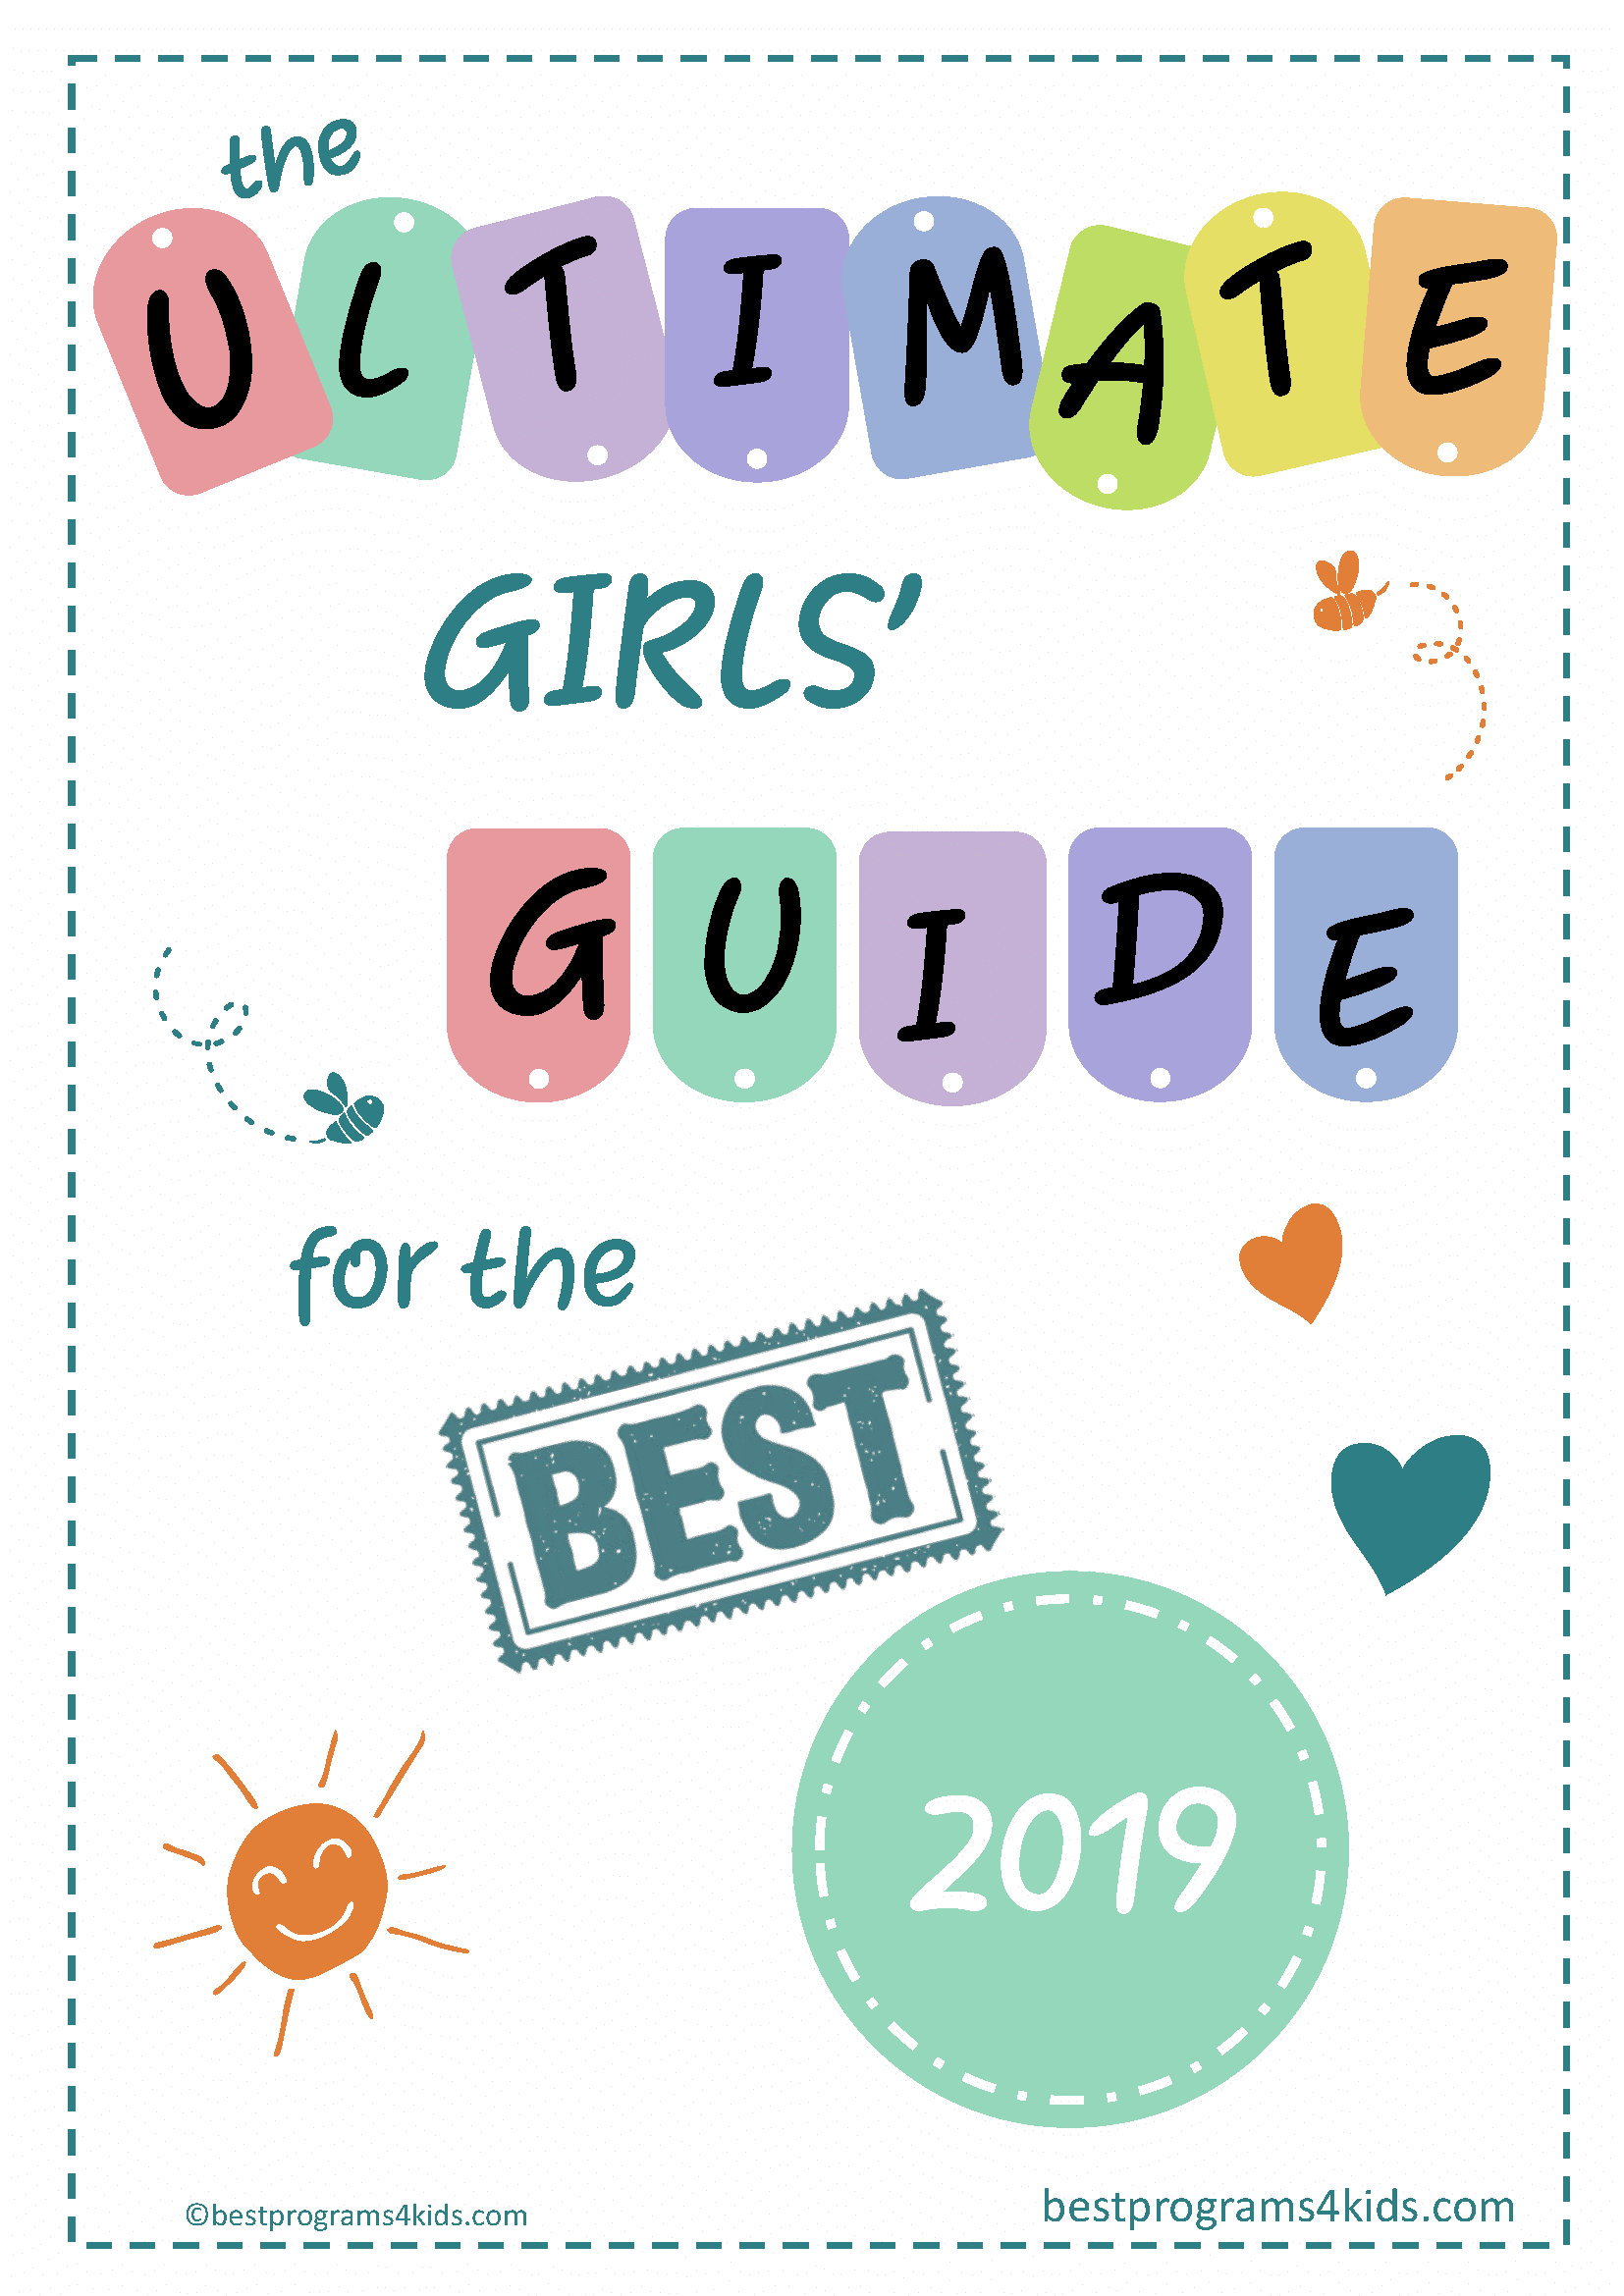 BEST 2019 Girls' Guide